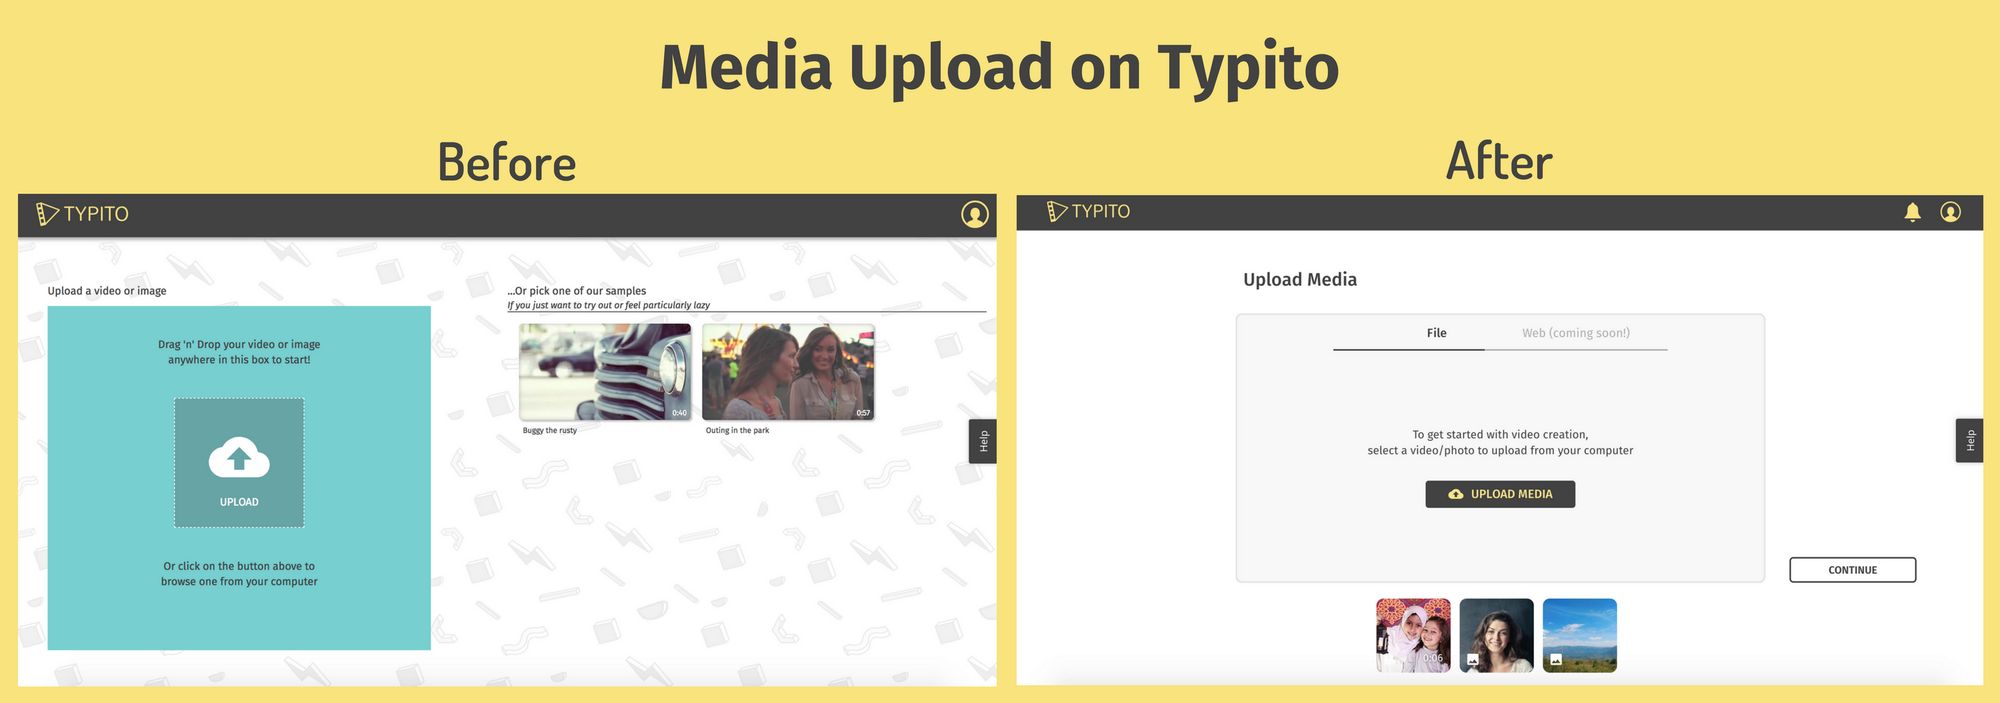 Media upload experience on Typito